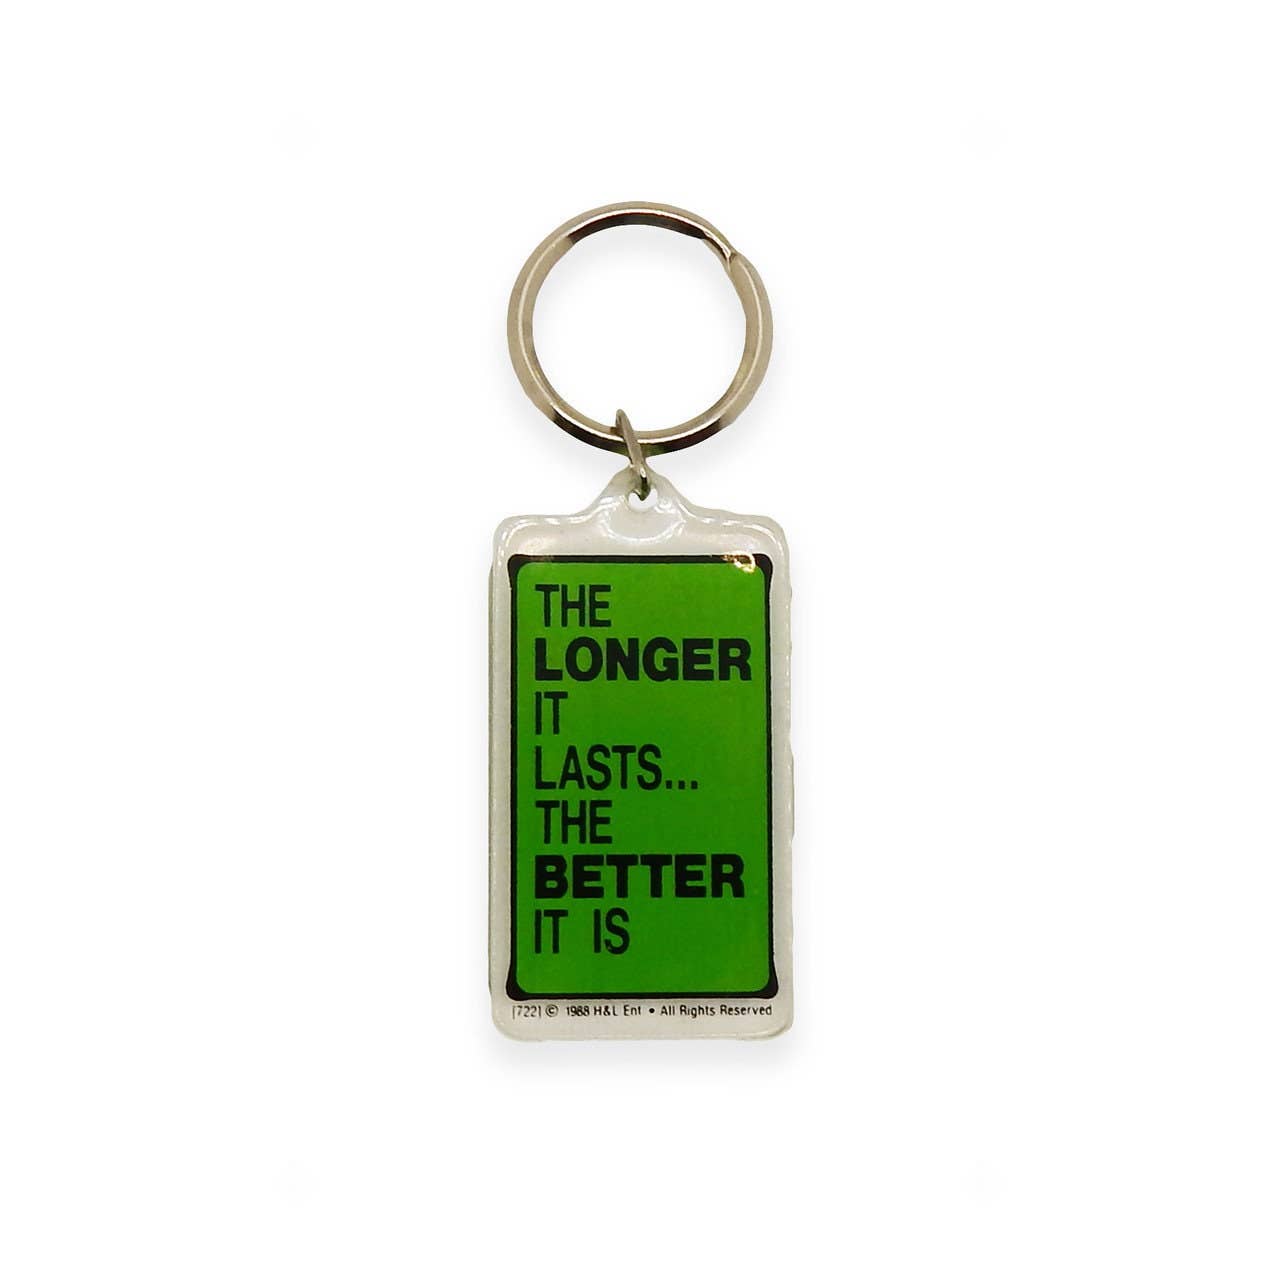 The Longer It Lasts... Vintage Keychain